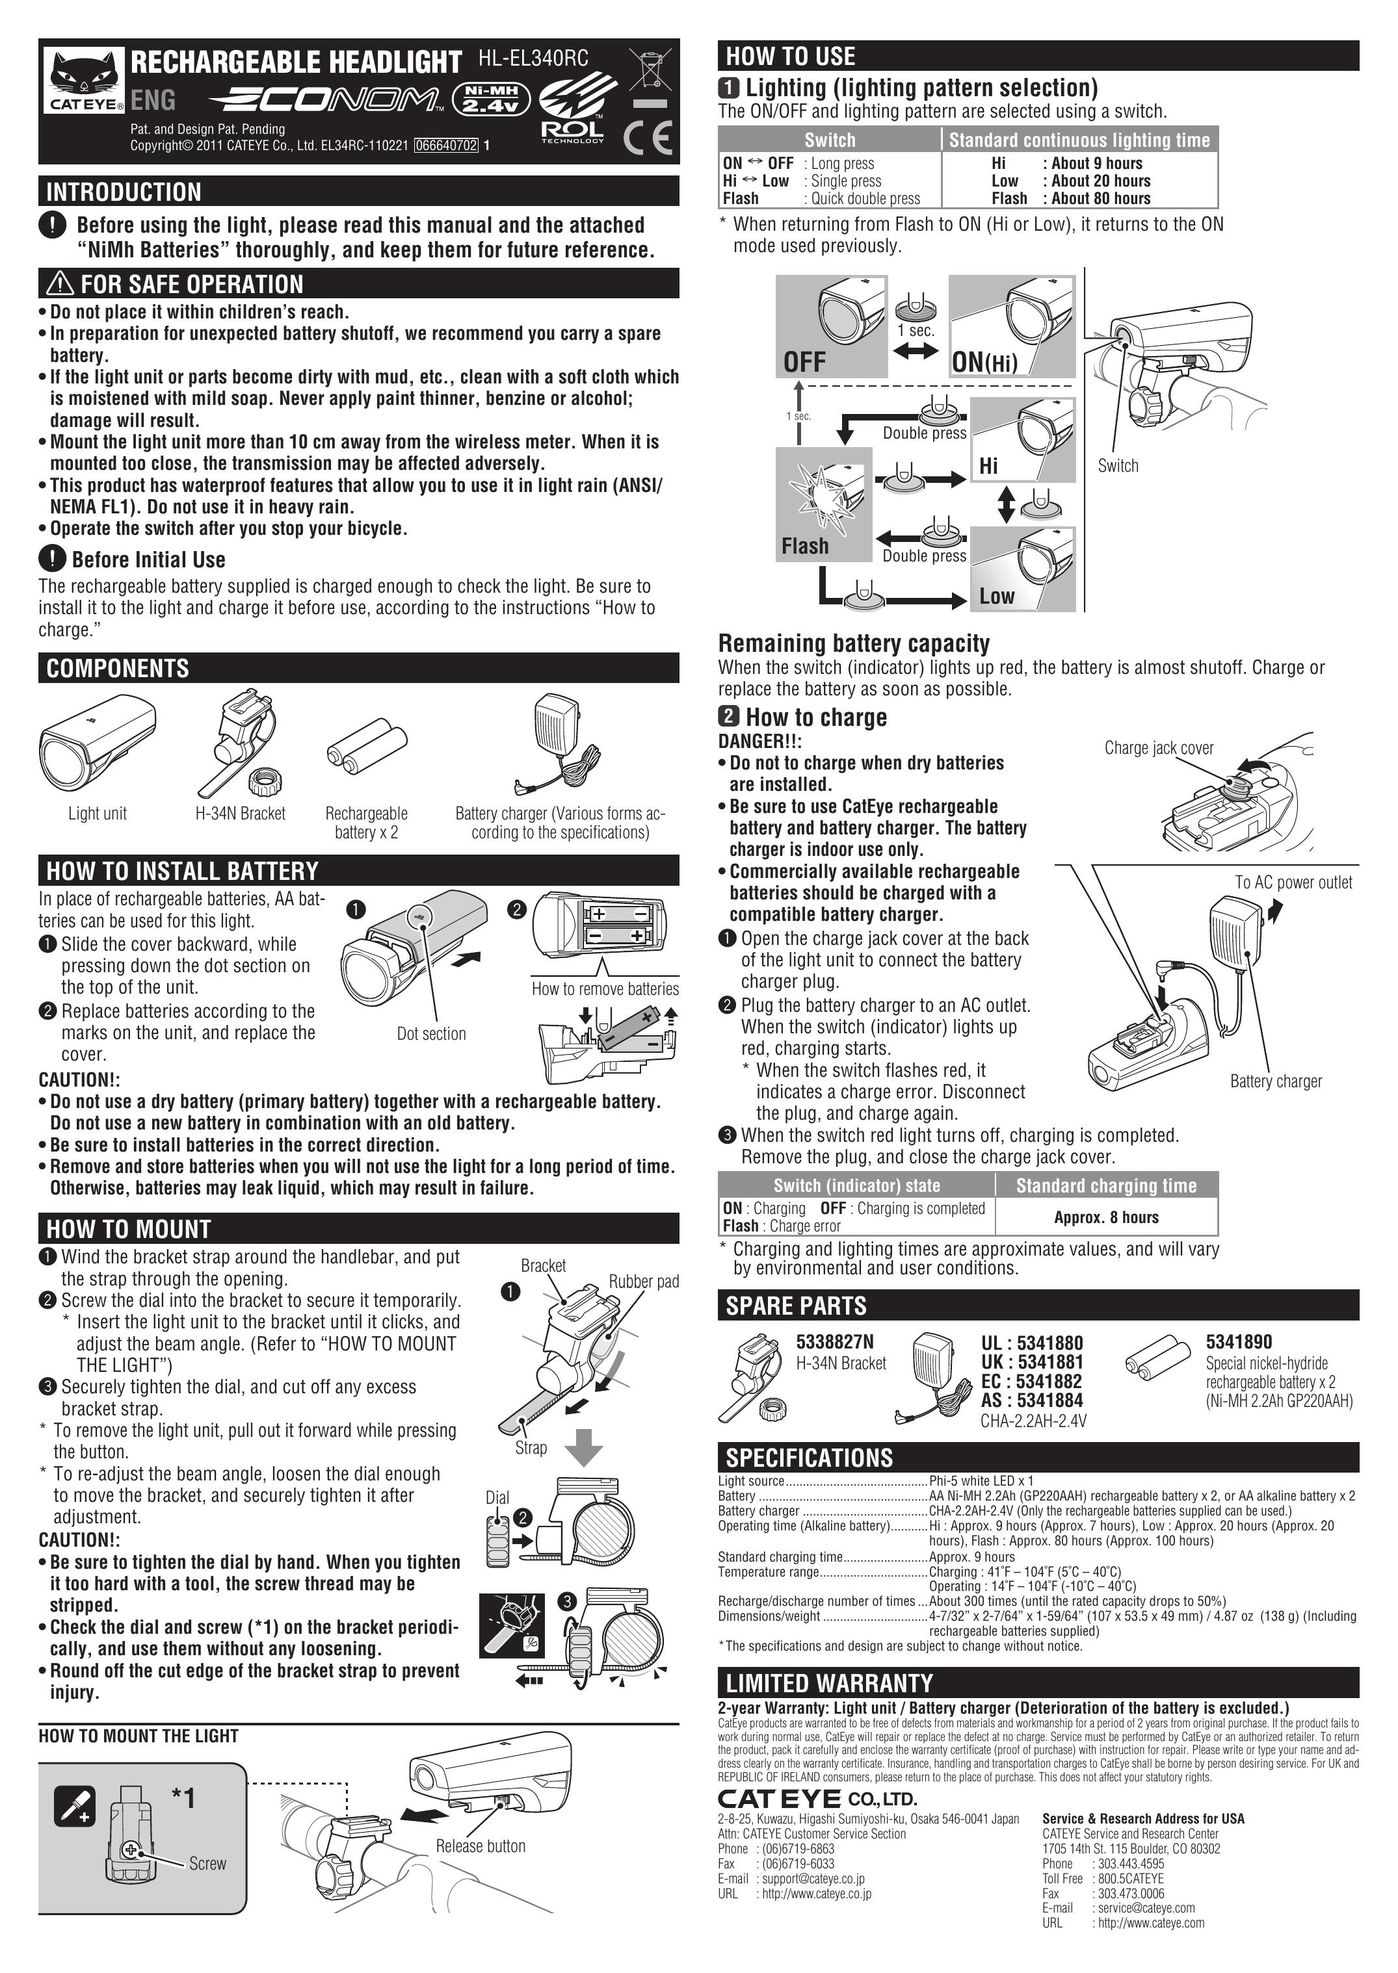 Cateye HL-EL340RC TV Mount User Manual